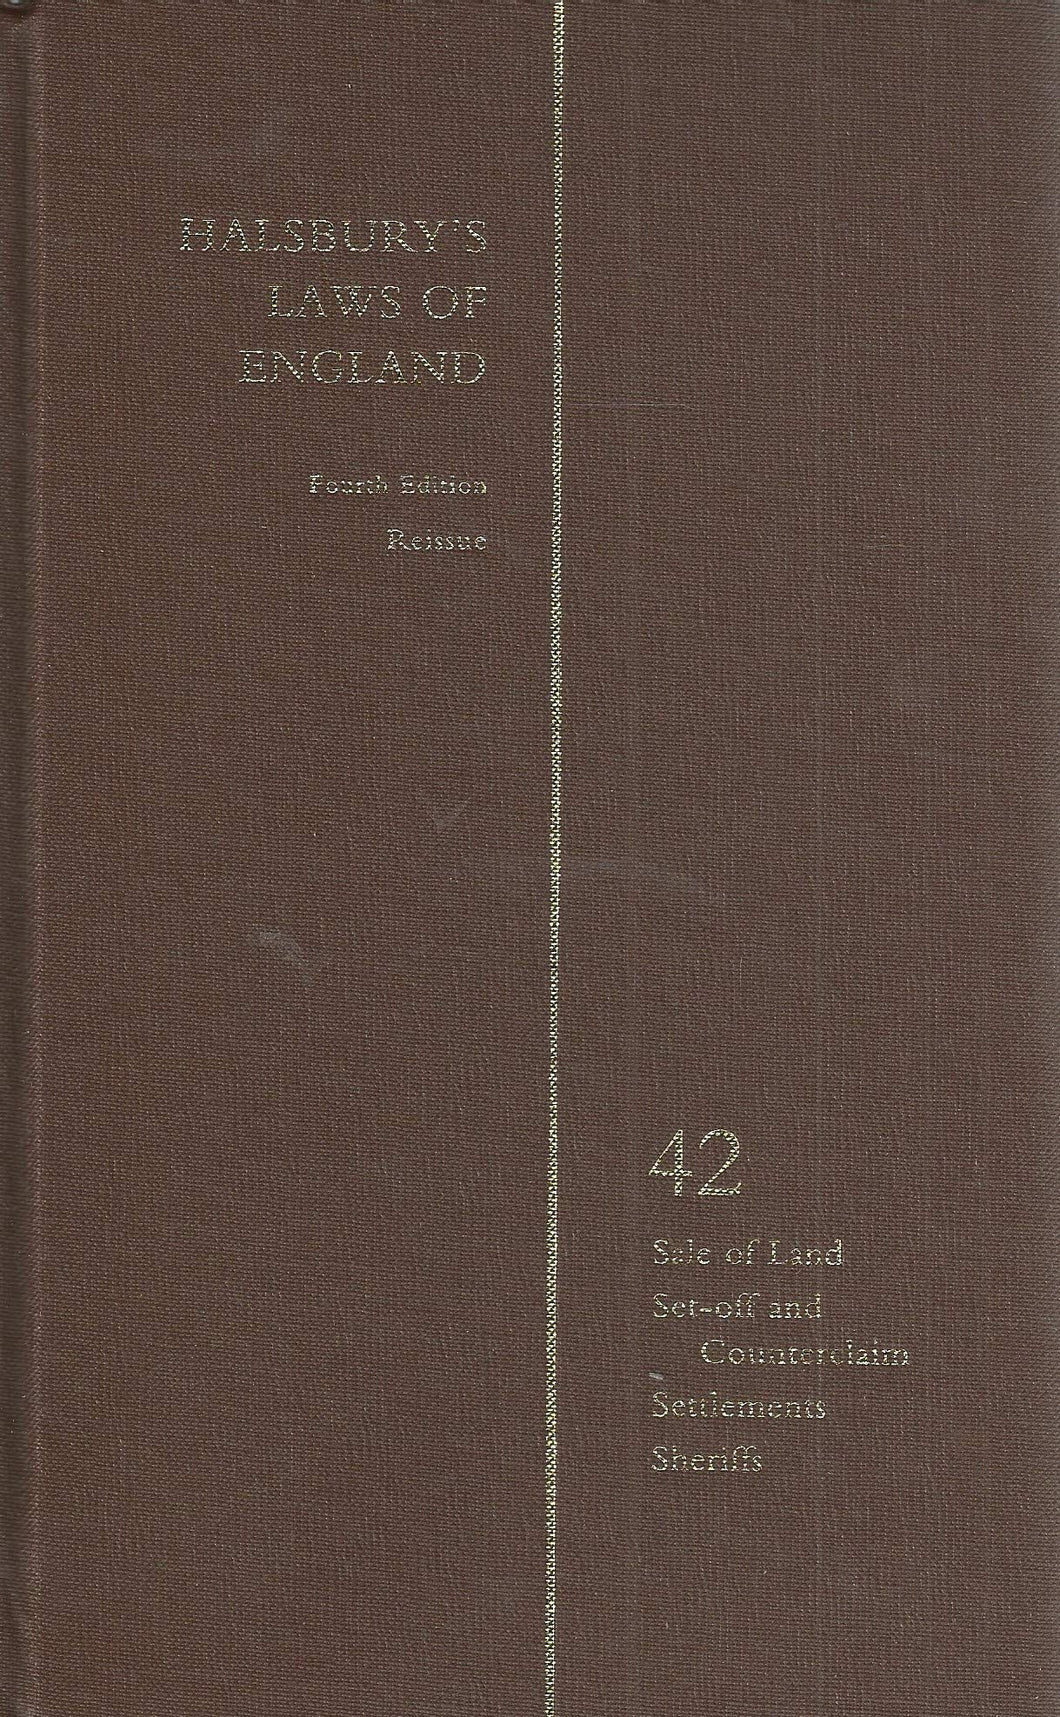 Halsbury's Laws of England Vol 42